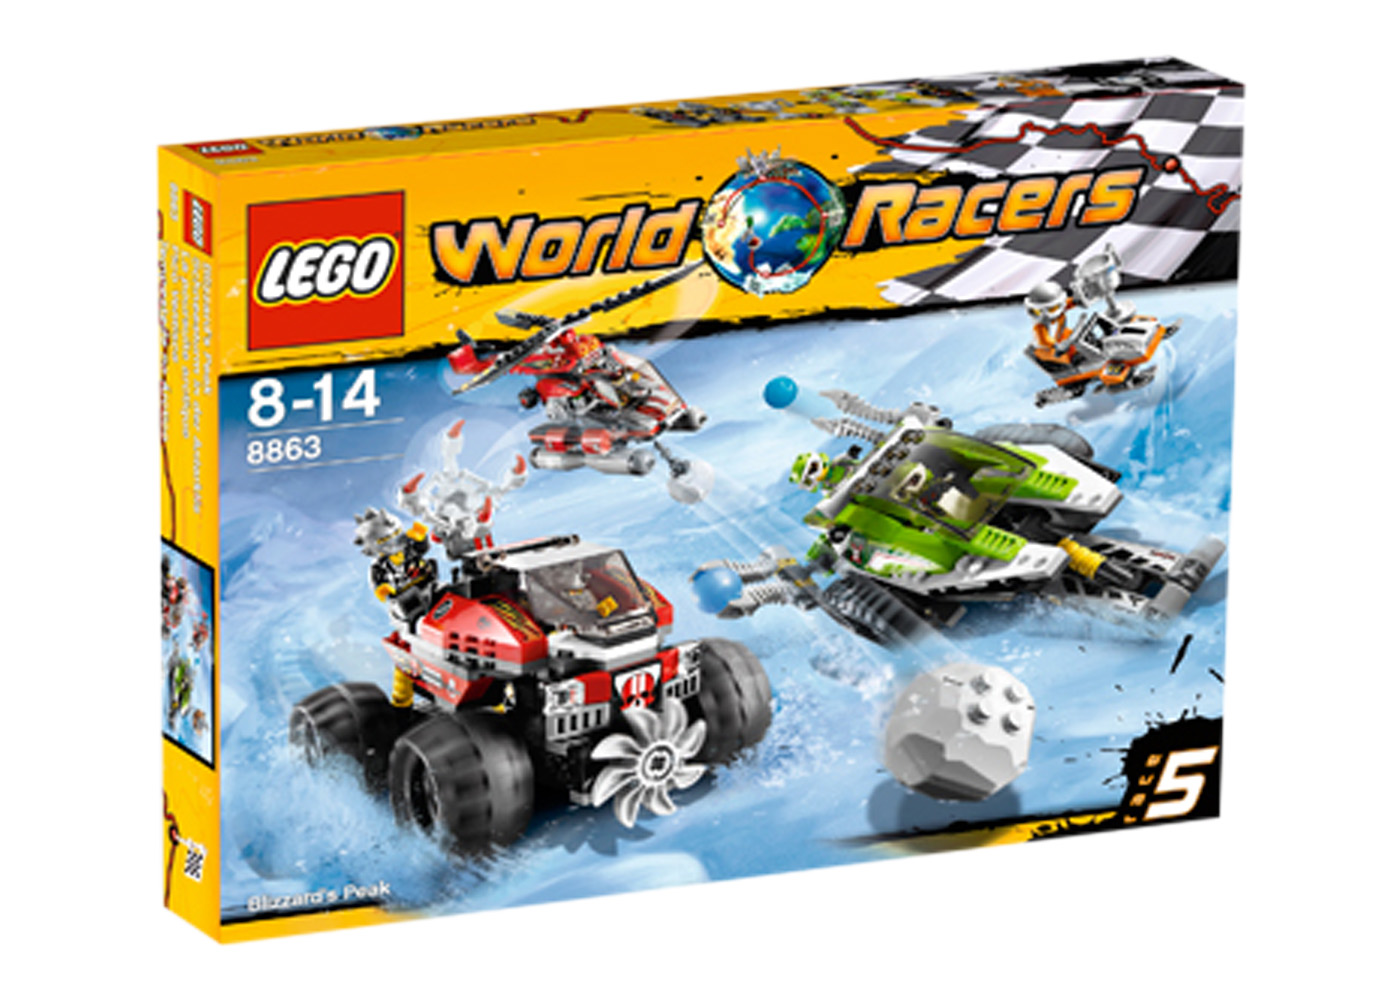 LEGO World Racers Blizzard's Peak Set 8863 - JP